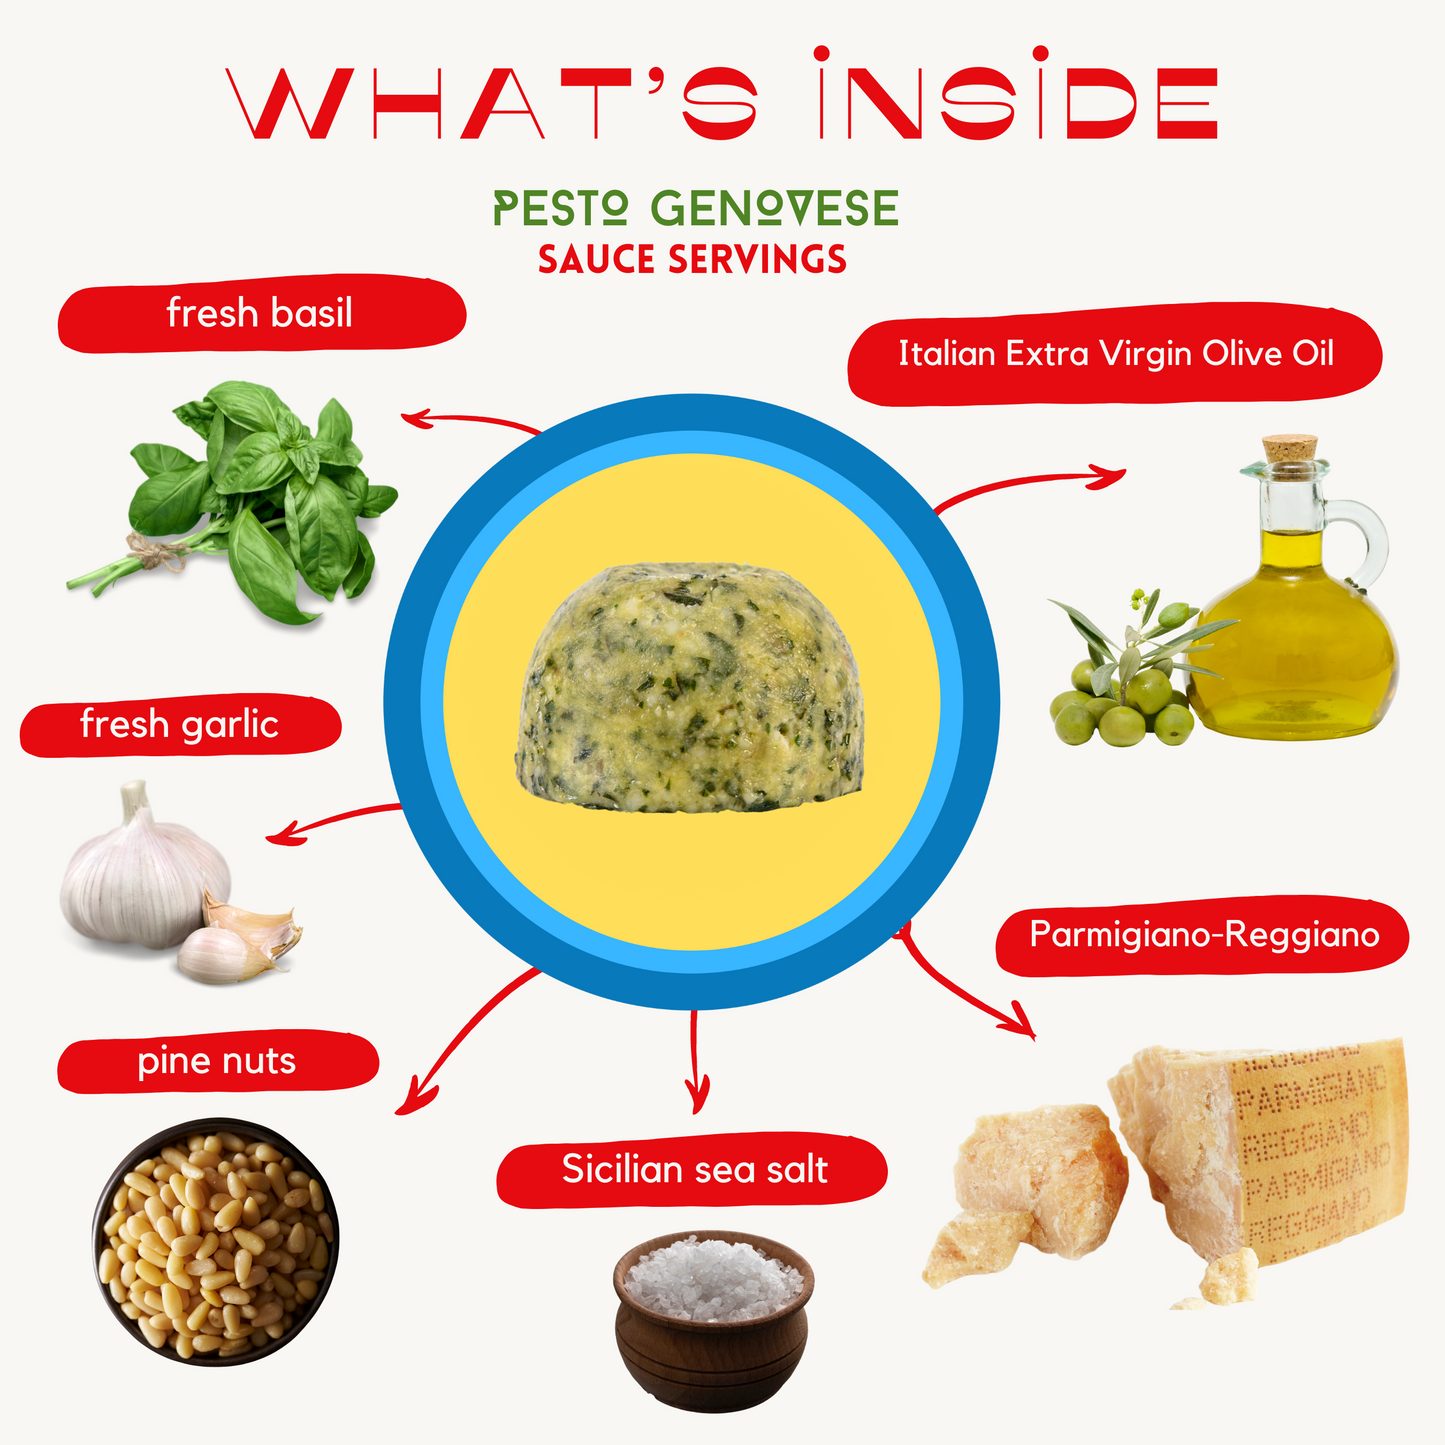 Pesto Genovese Sauce Servings